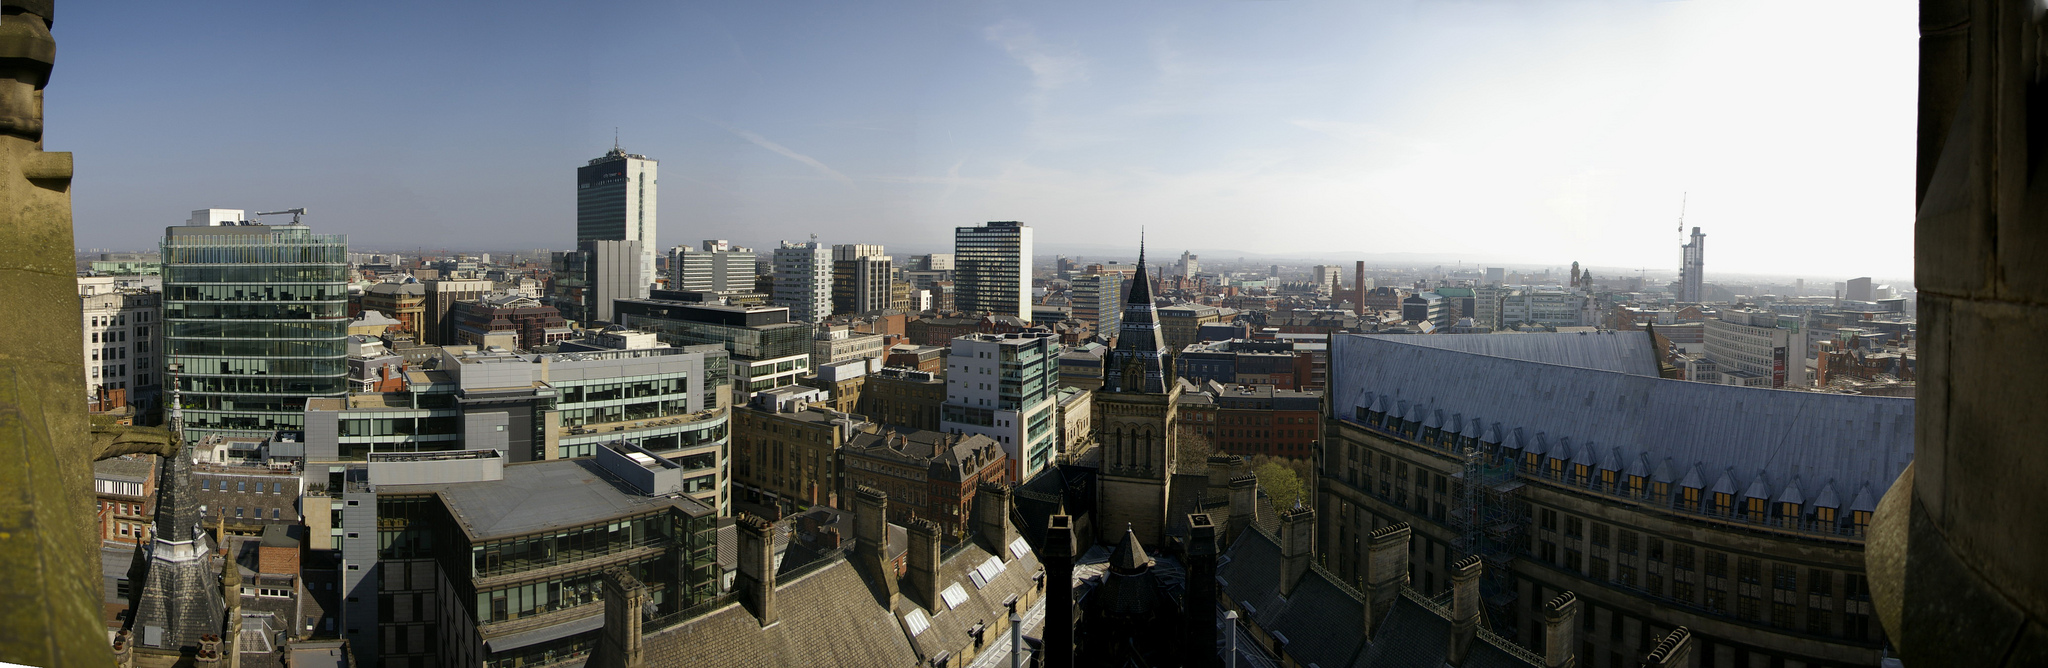 Manchester Skyline photo